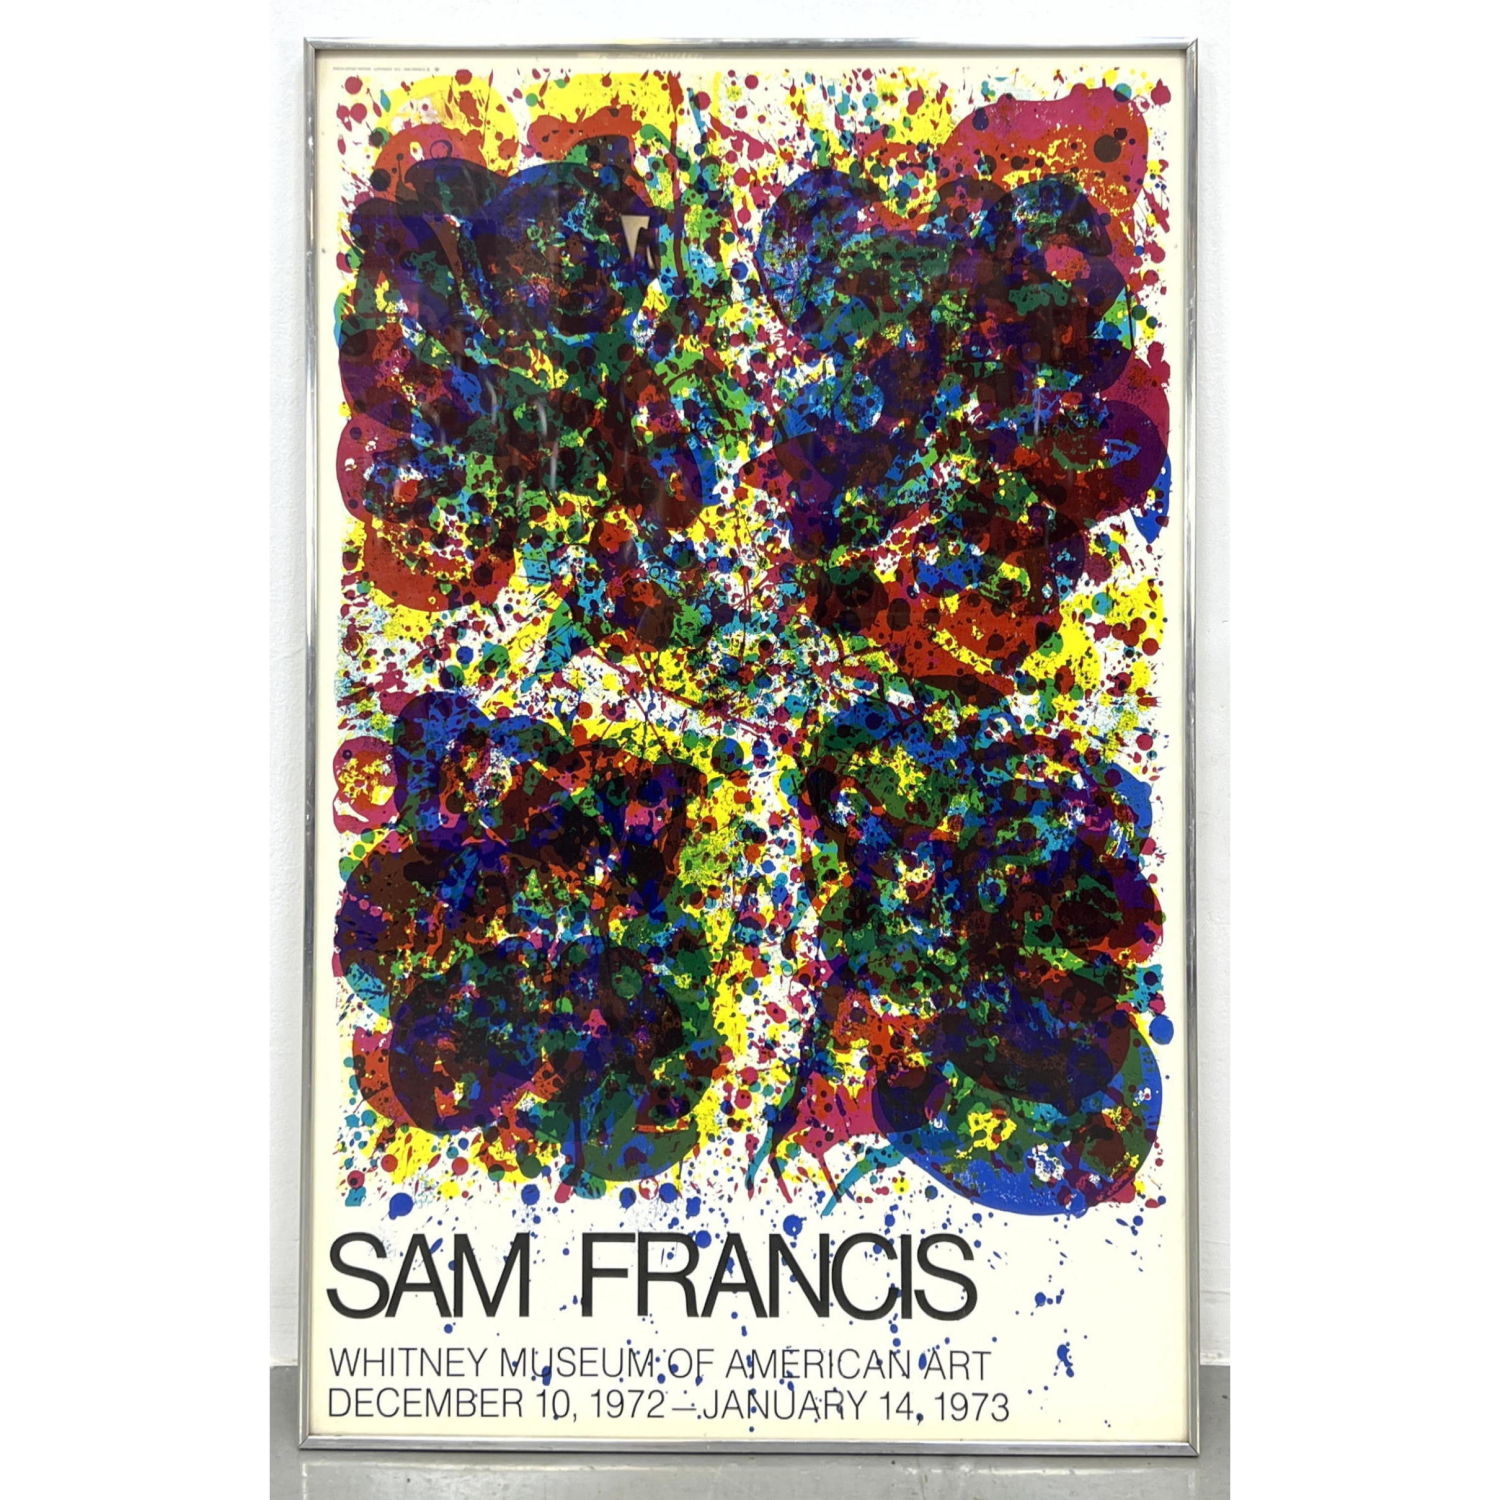 SAM FRANCIS Original exhibition